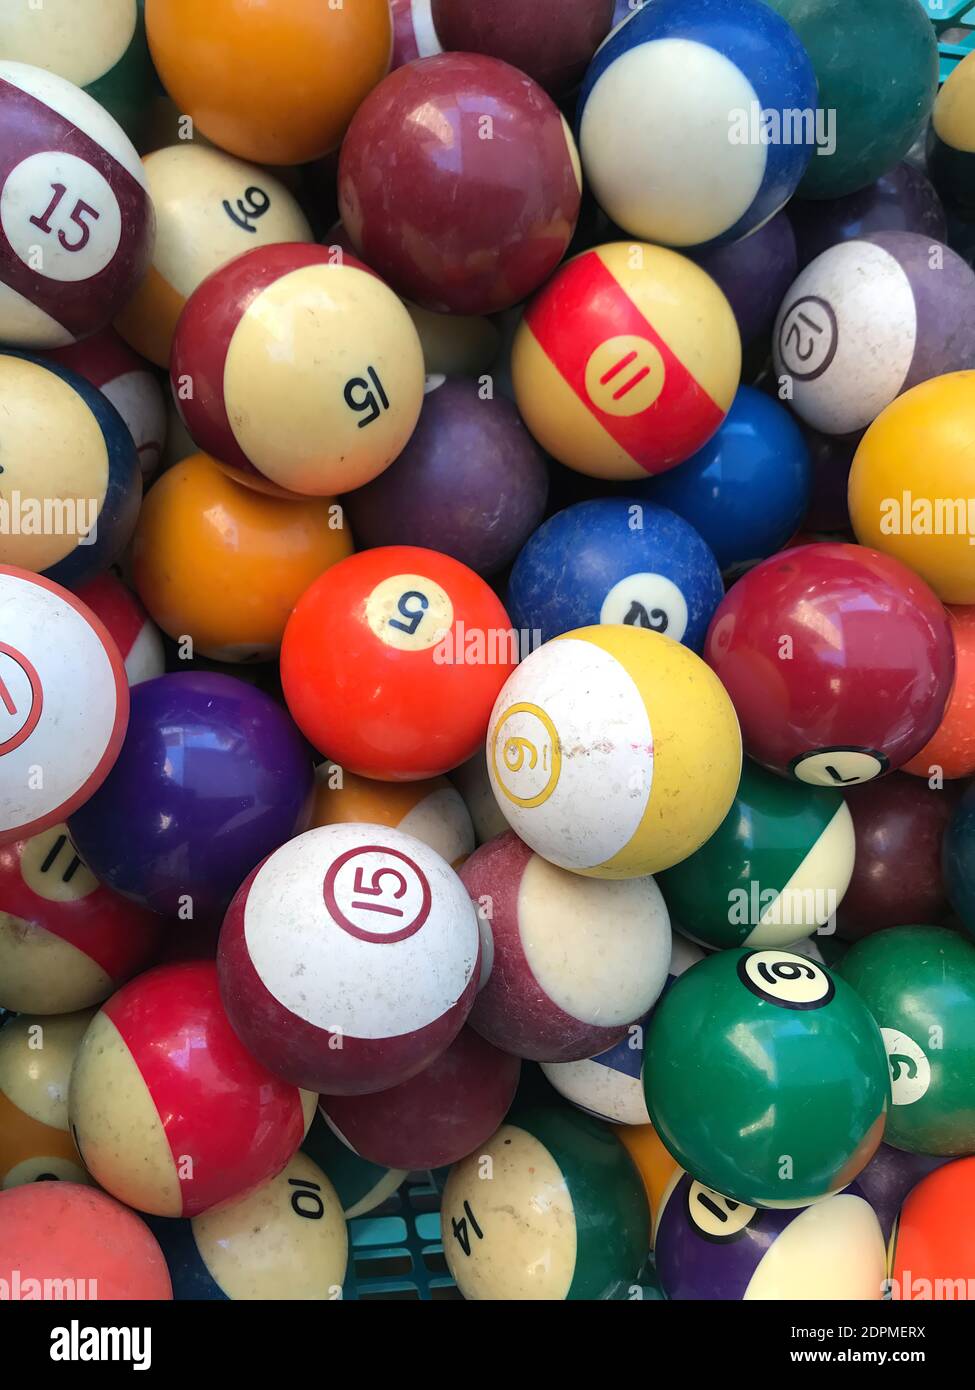 Un tas de boules de billard multicolores vintage Banque D'Images